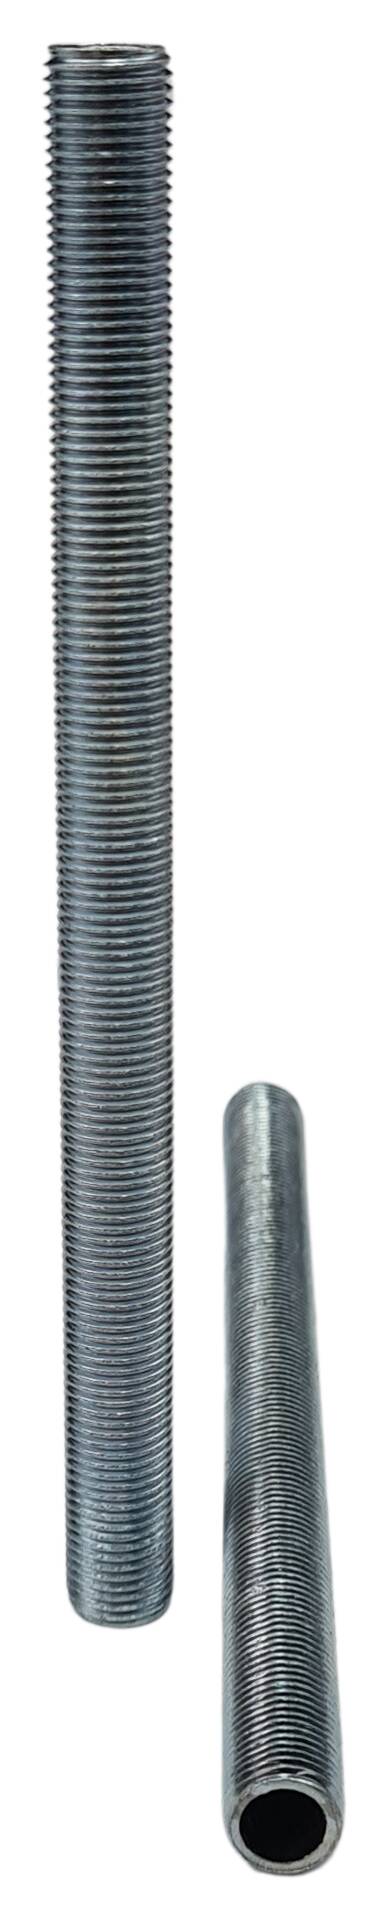 iron thread tube M10x1x135 round zinc